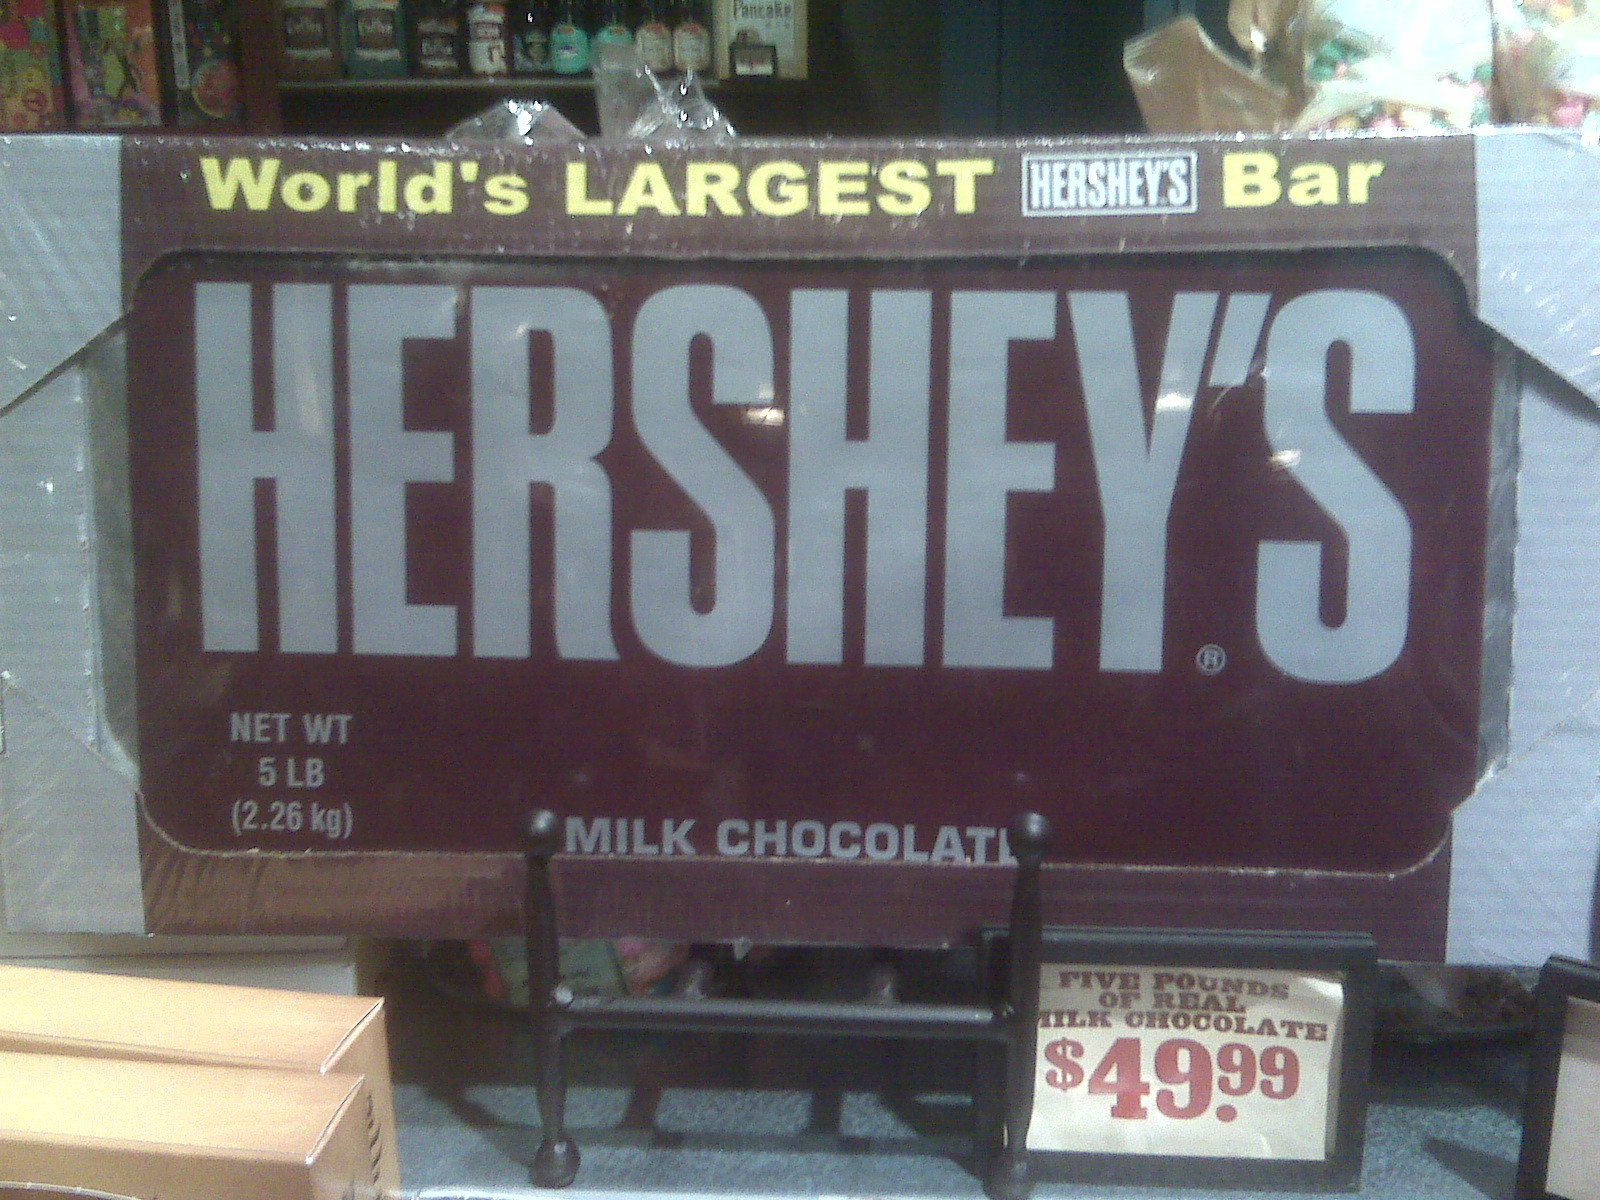 Giant Hershey Bar